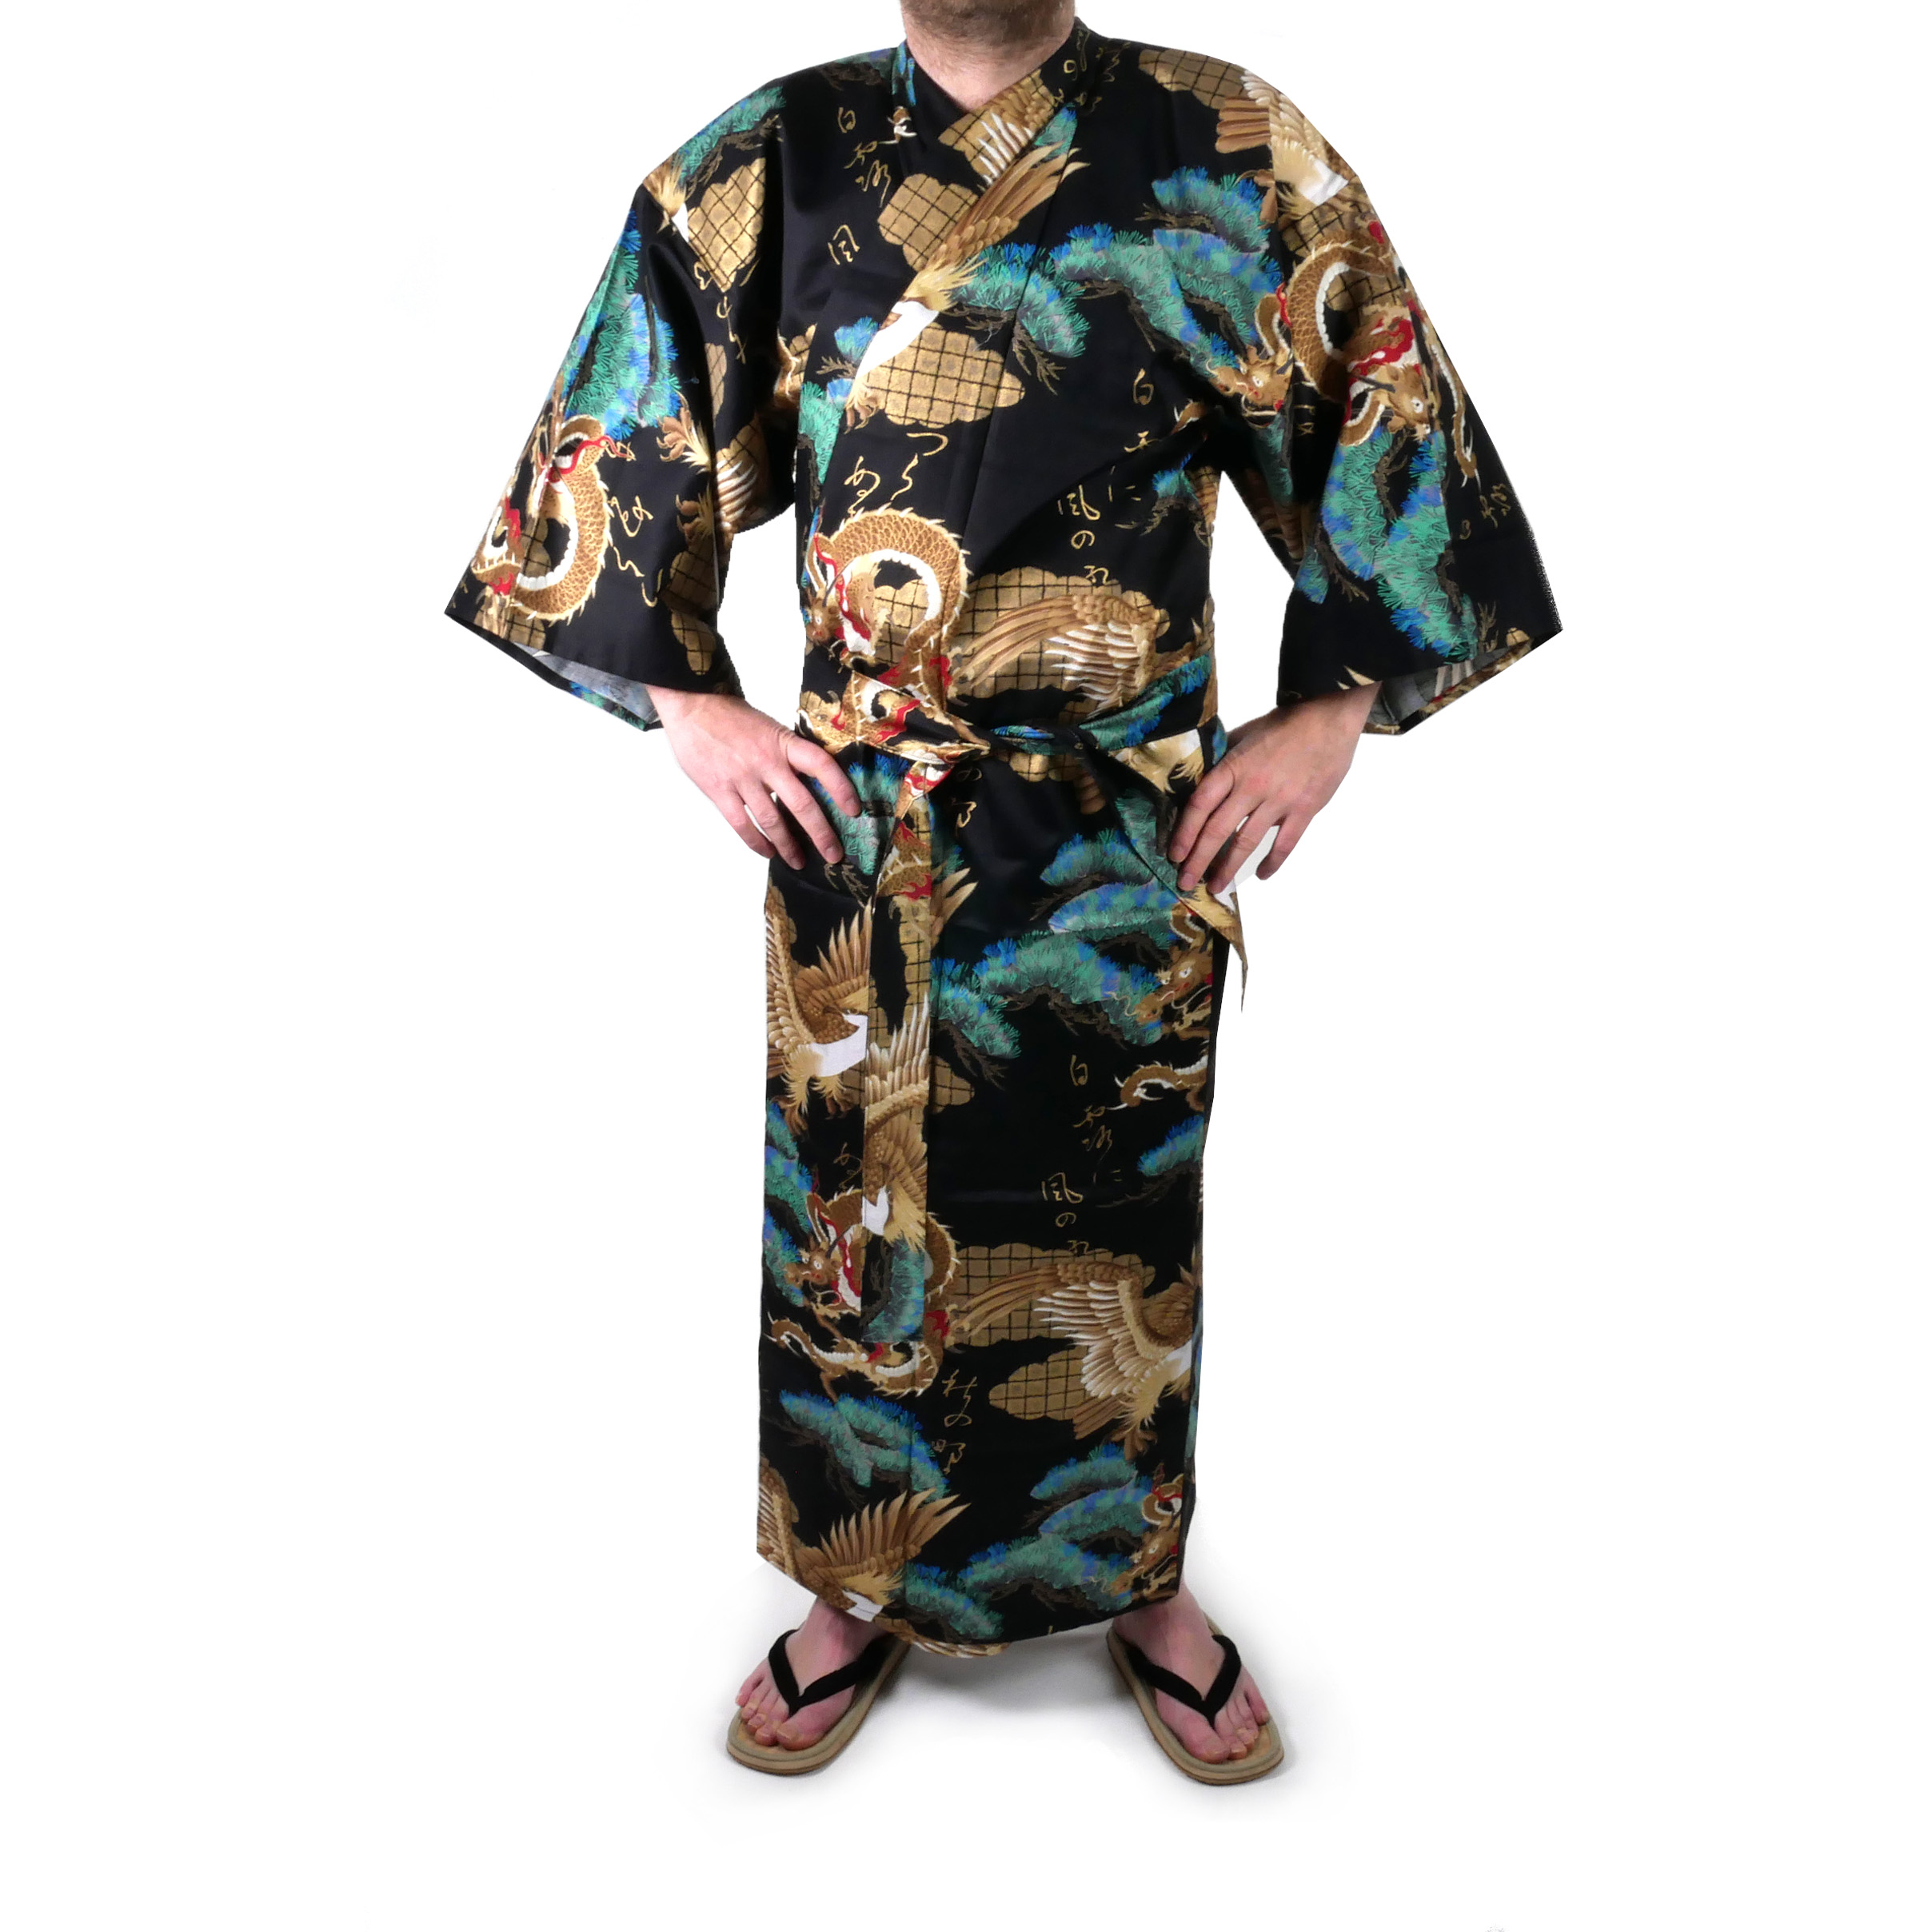 Japanese traditional cotton yukata KANJI. Japanese style home gown